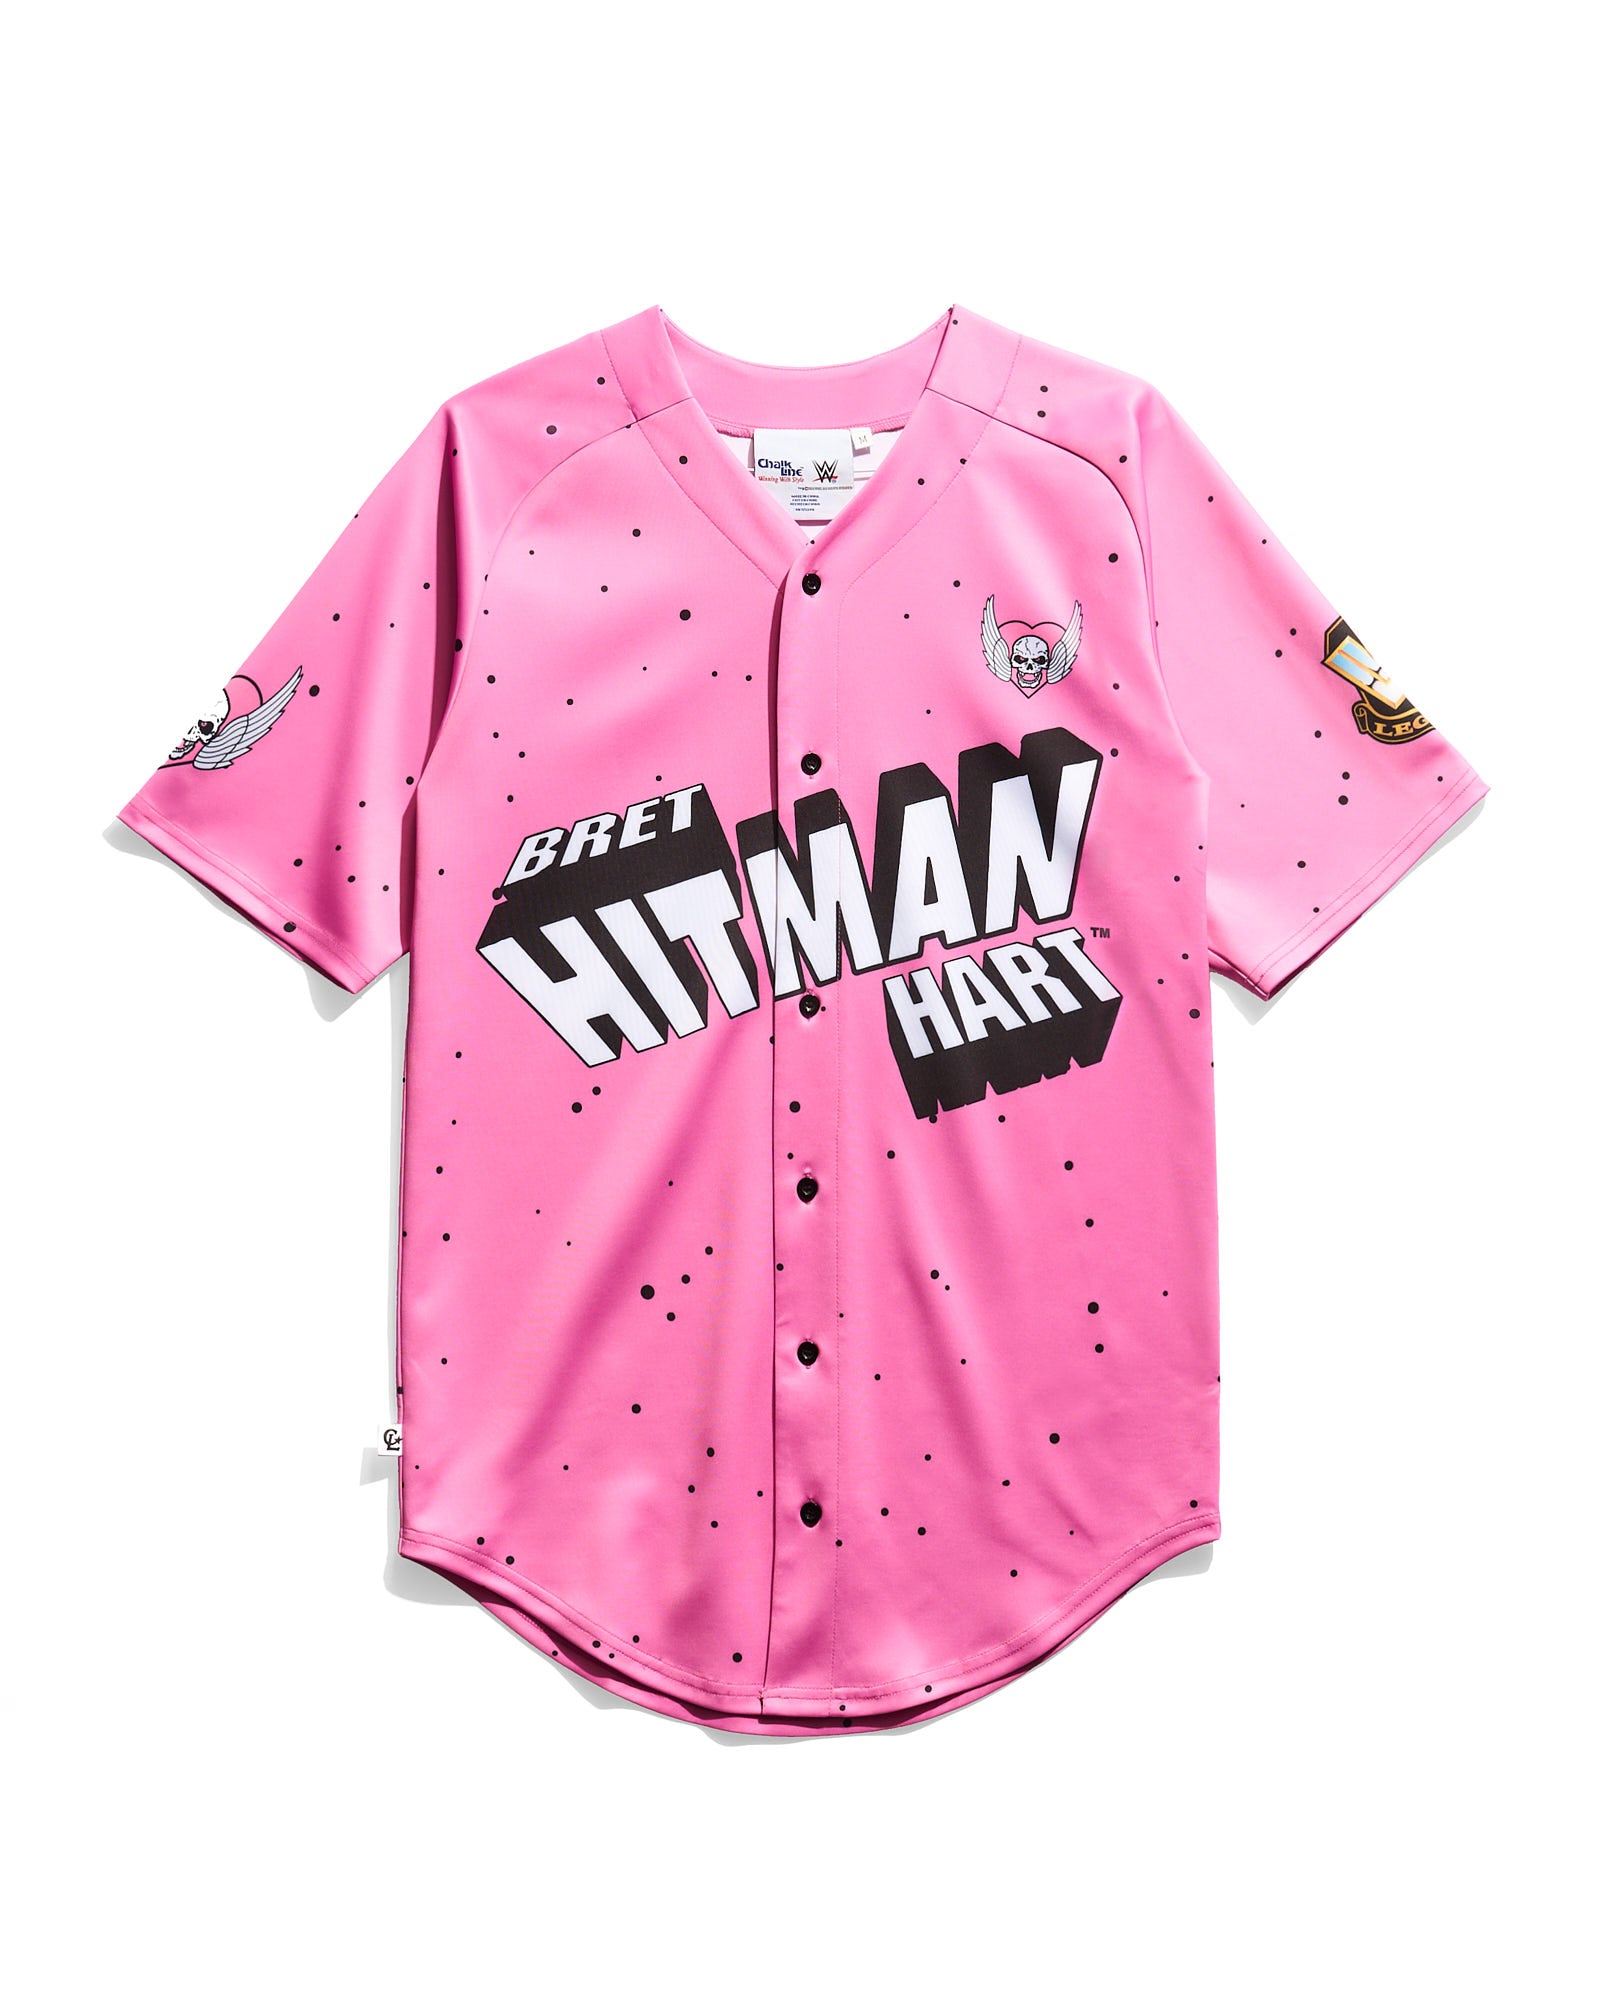 Bret Hart WWE Legends Speckle Baseball Jersey, XL